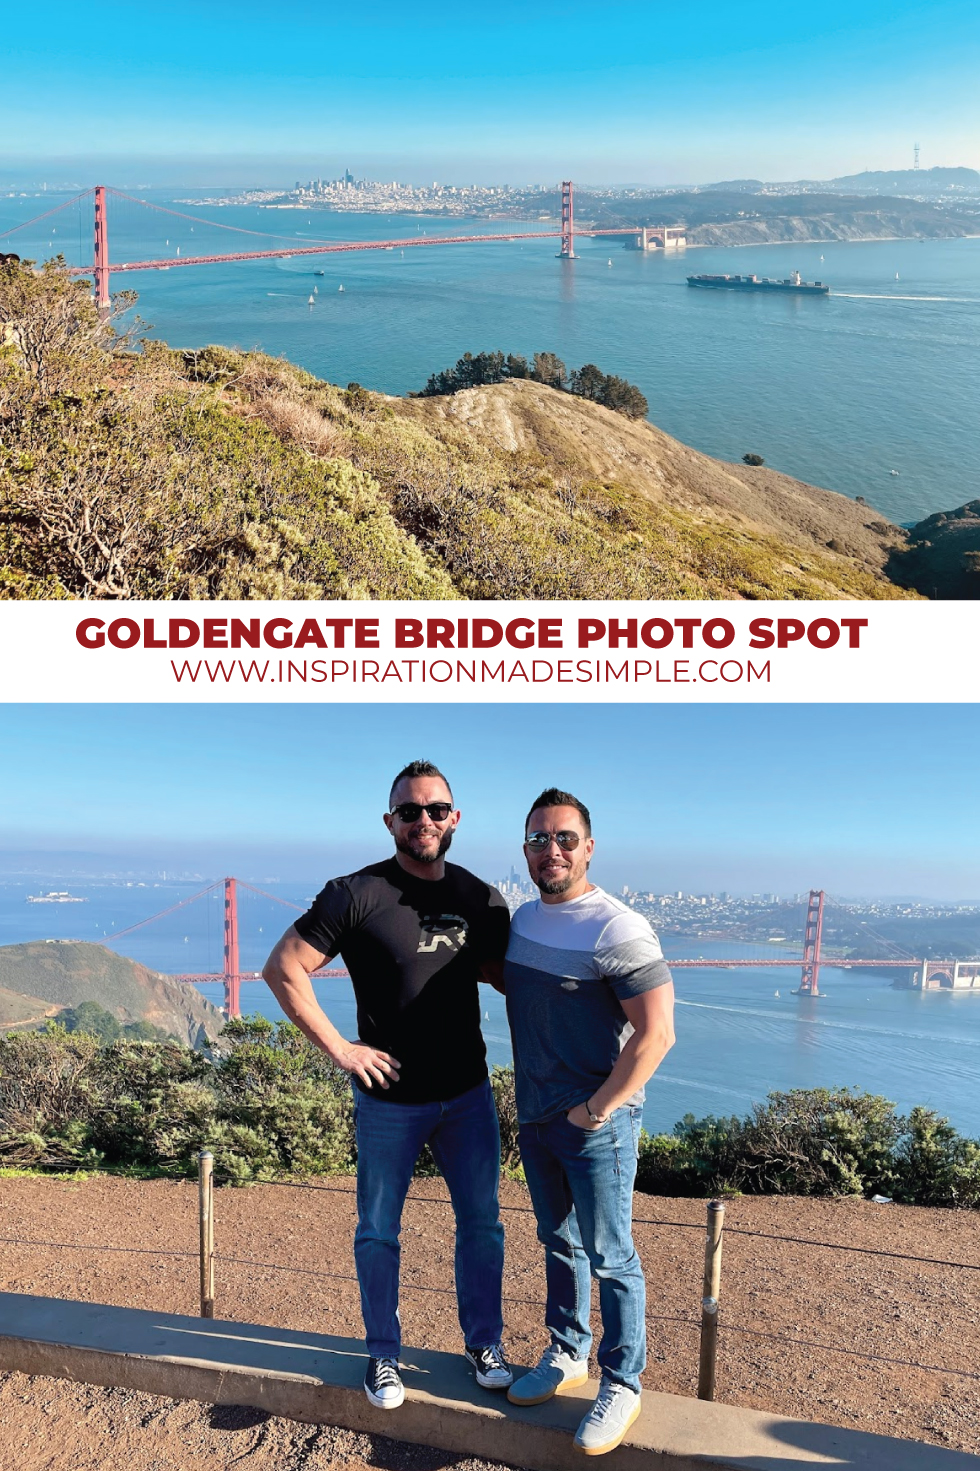 Goldengate Bridge Photo Spot